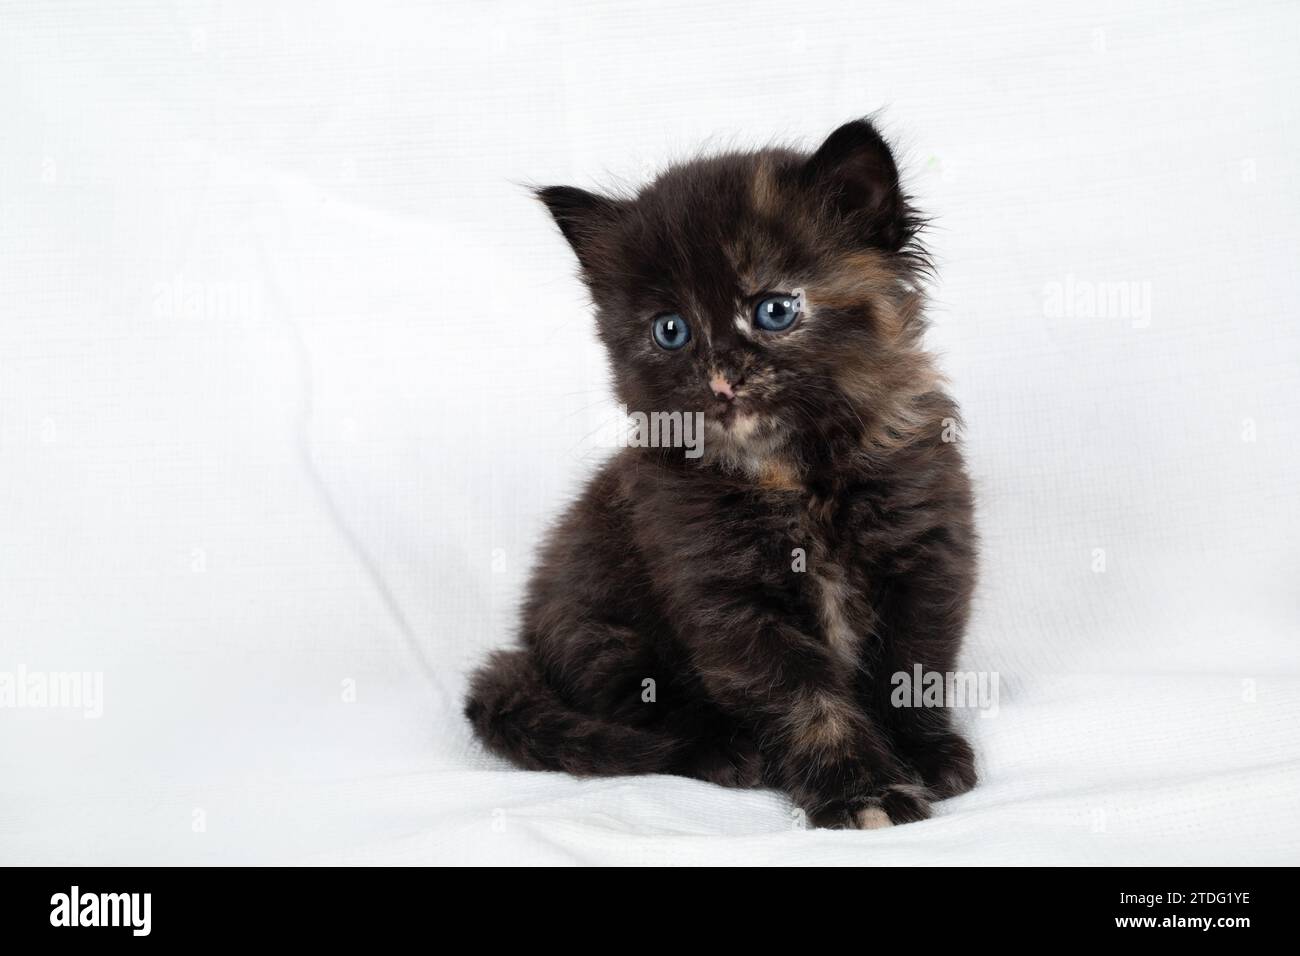 A curious kitten. Cute tortoiseshell kitten sits against a white sheet background. Stock Photo